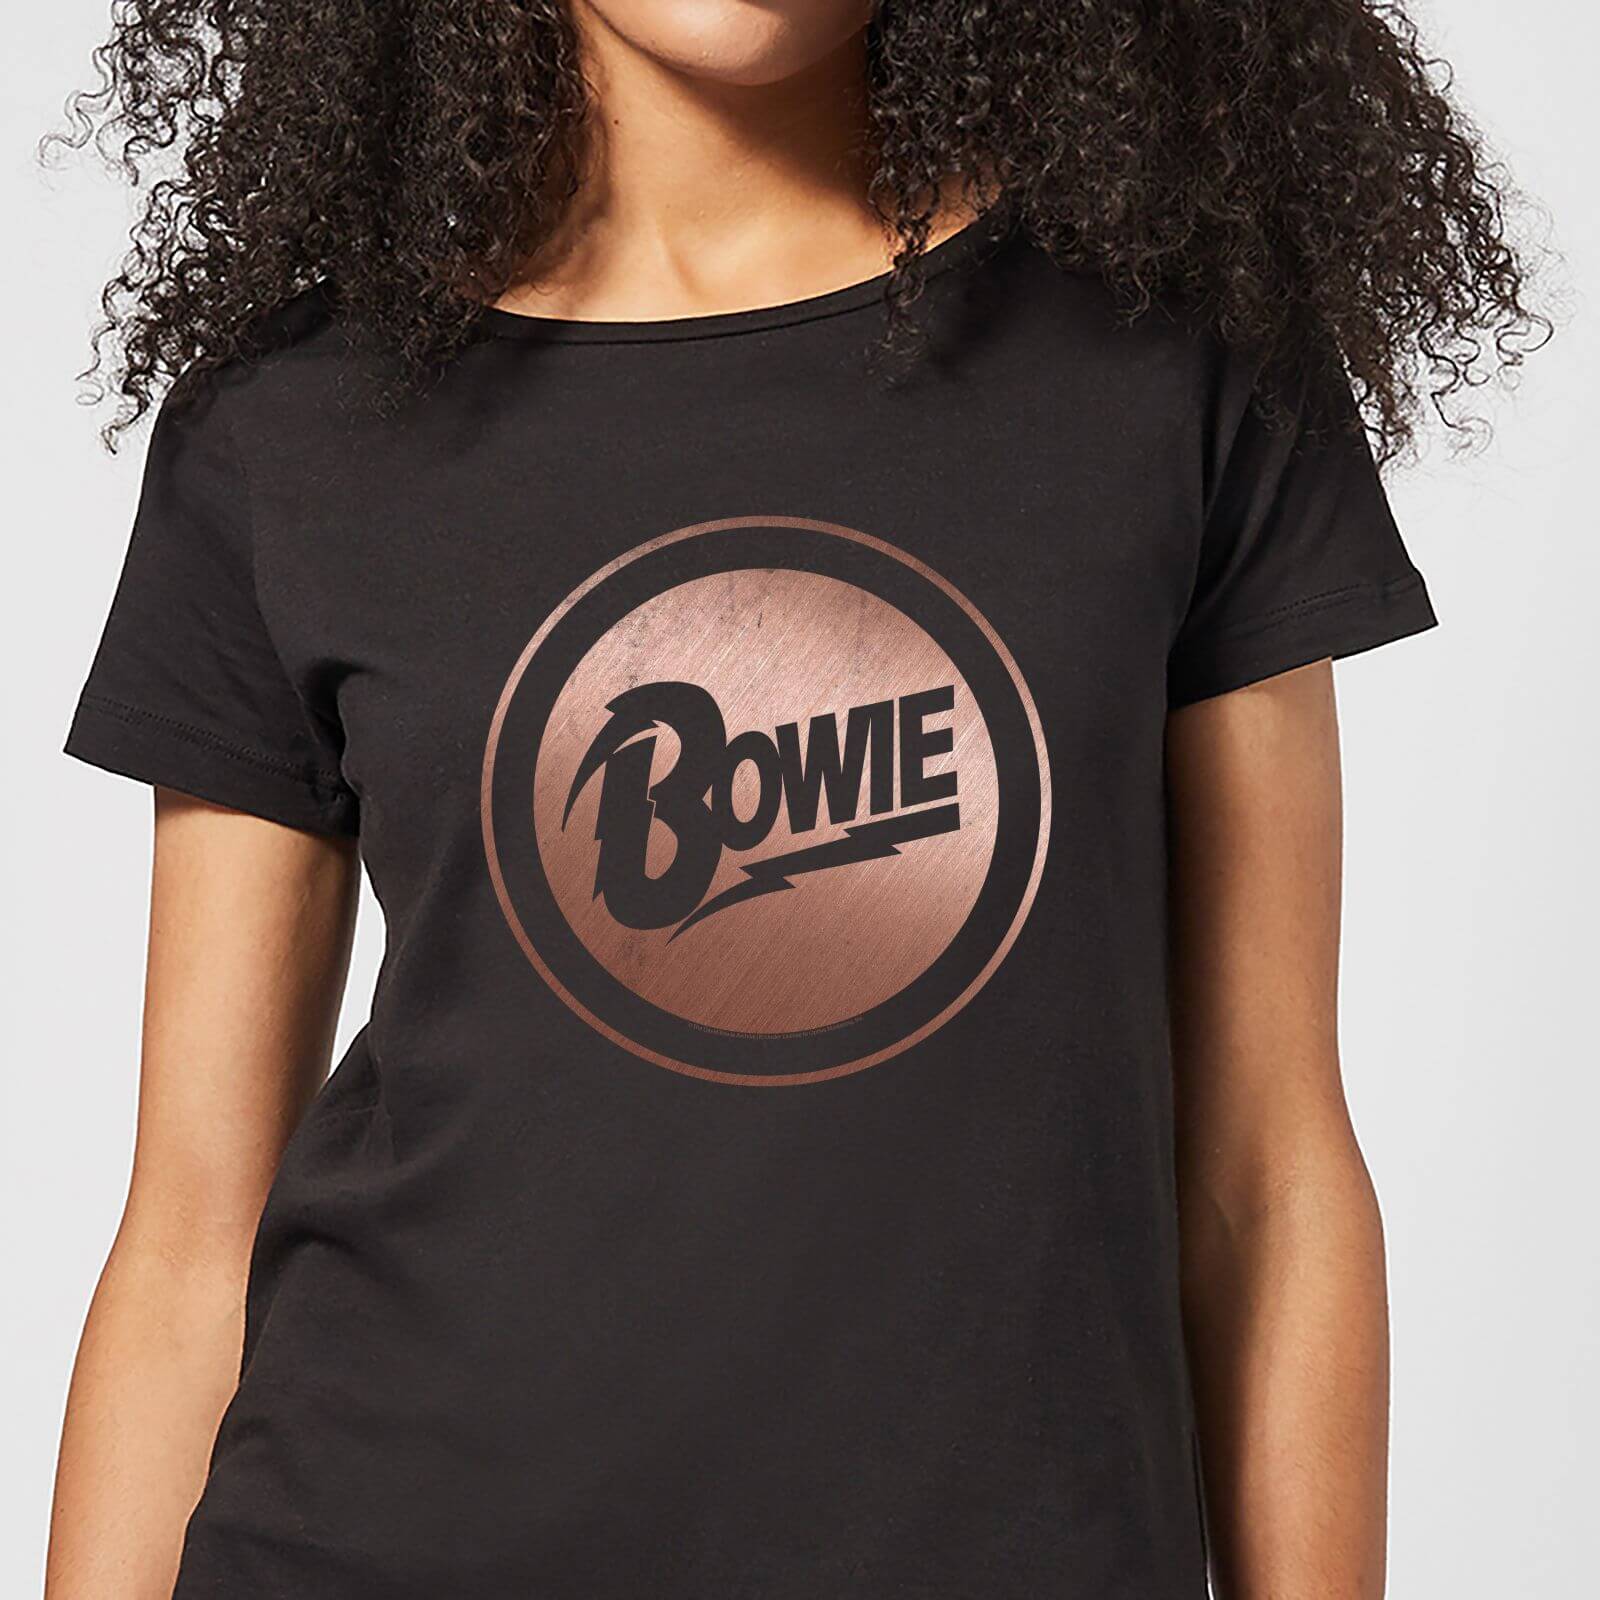 David Bowie Rose Gold Badge Women's T-Shirt - Black - M - Black